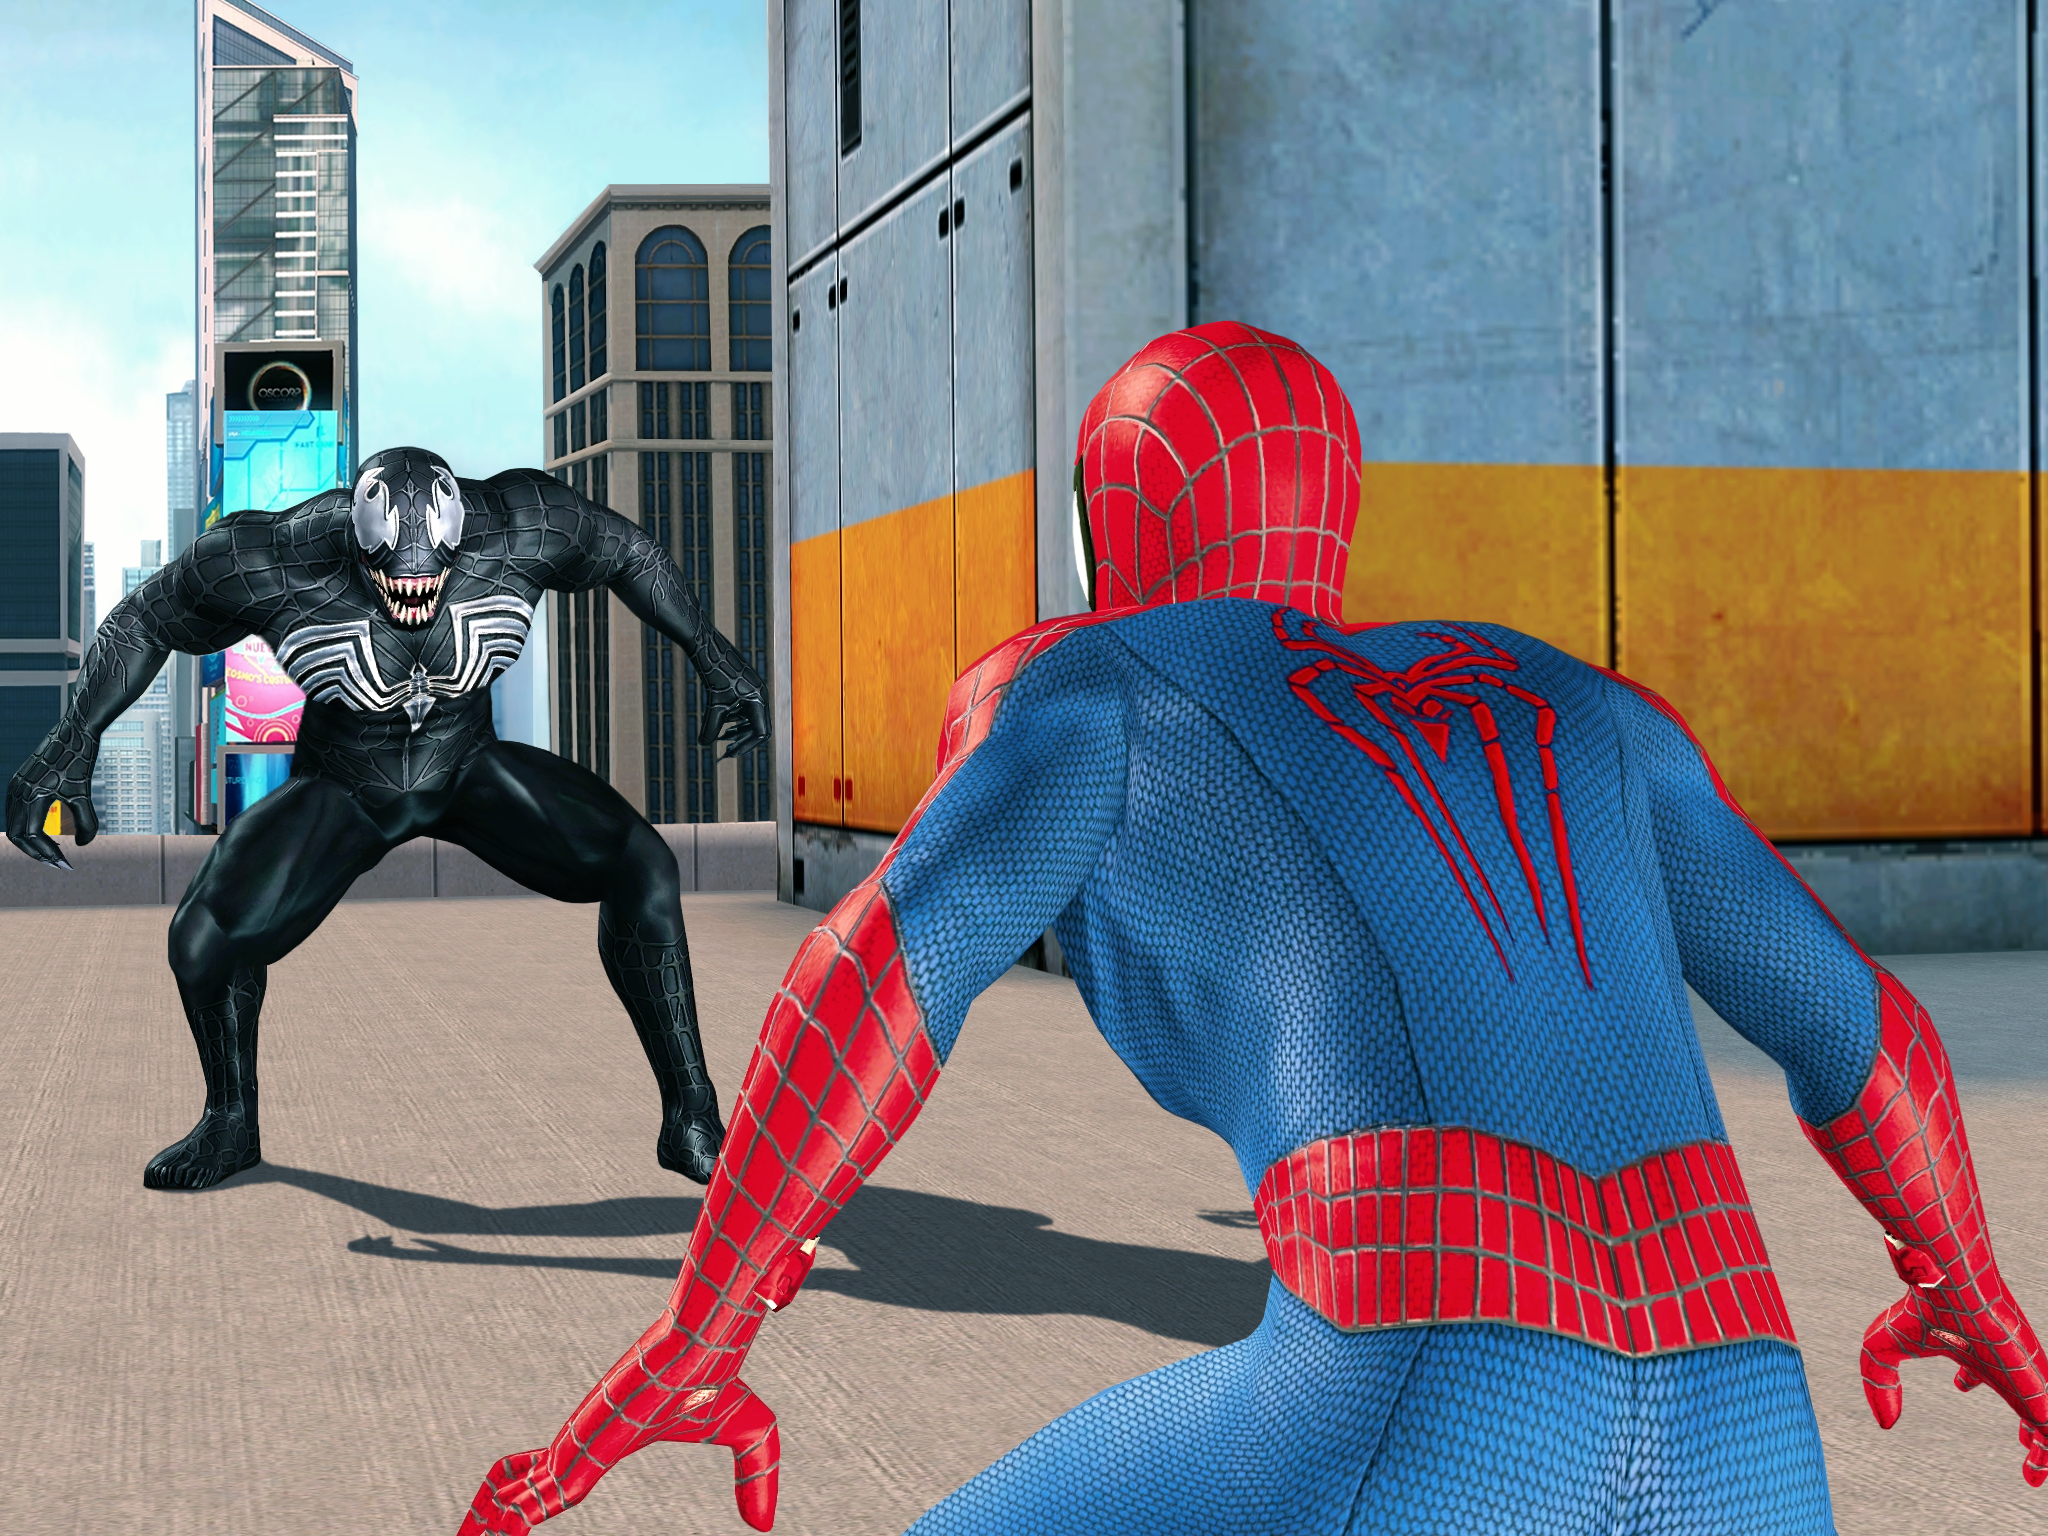 Спайдер Мэн 2 игра. The amazing Spider-man (игра, 2012). The amazing Spider-man 1 Веном. Тхе амазинг Спайдермен 2.